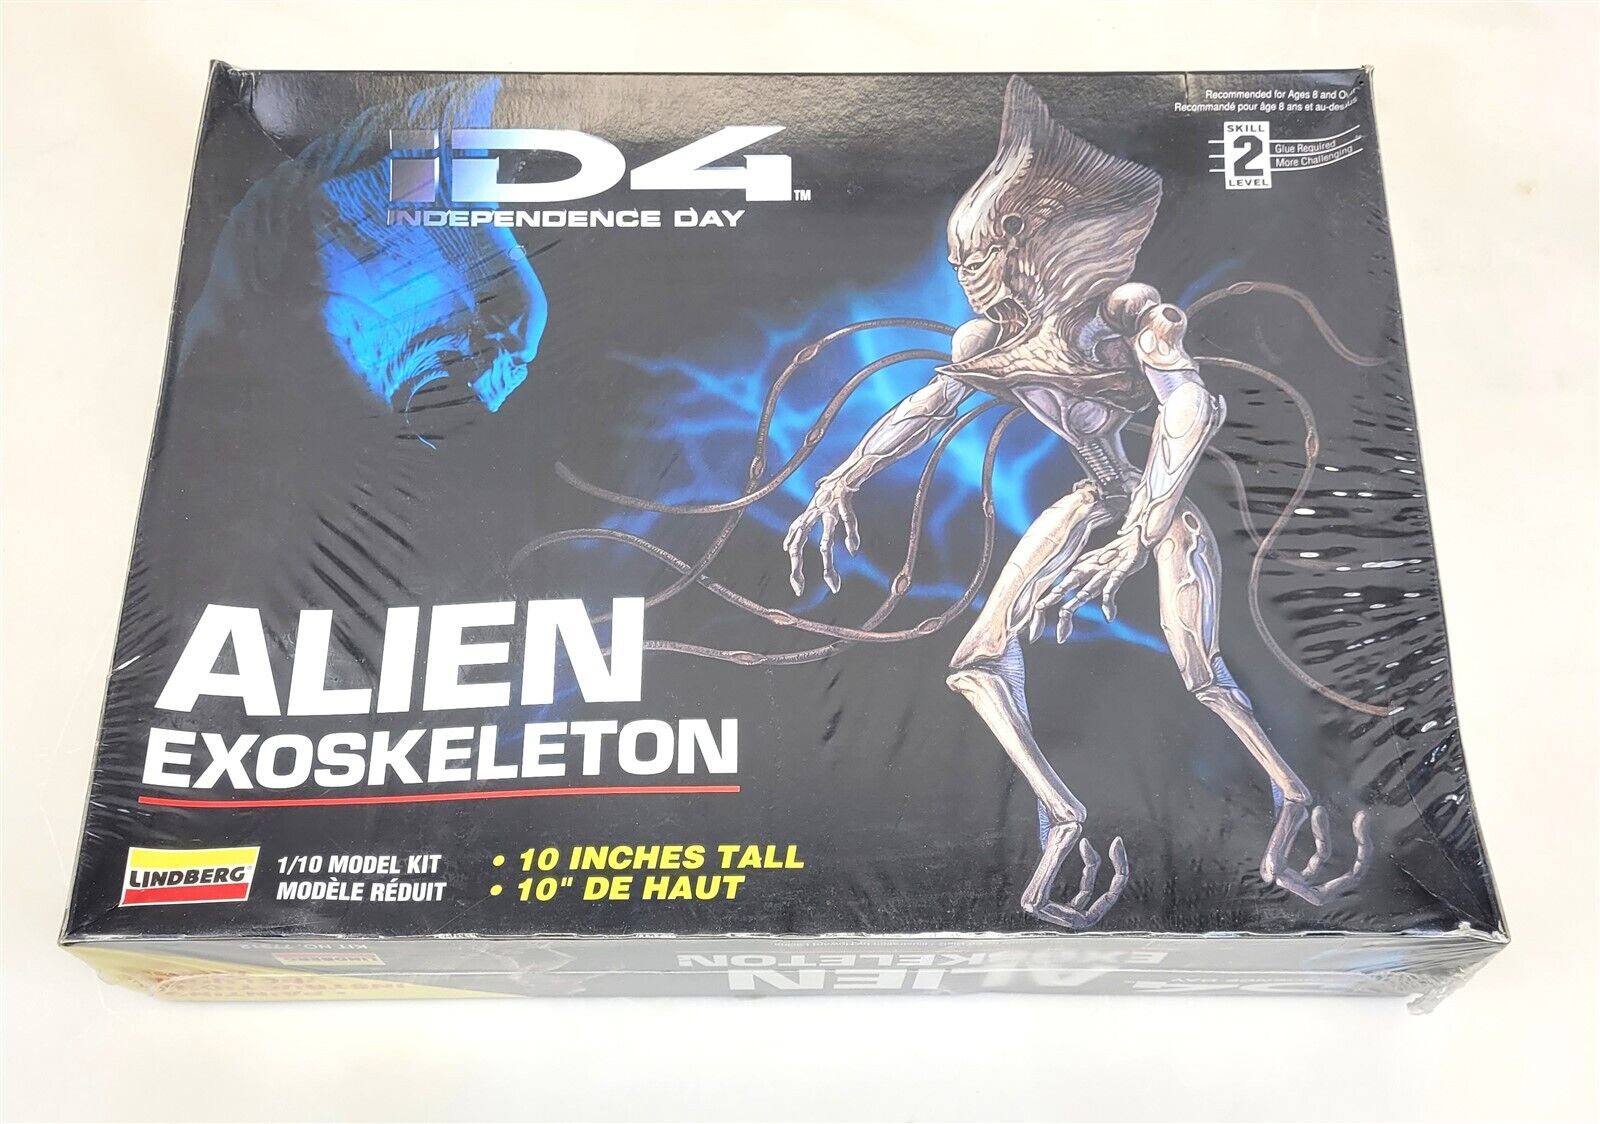 LINDBERG 77312 iD4 Independence Day Alien Exoskeleton